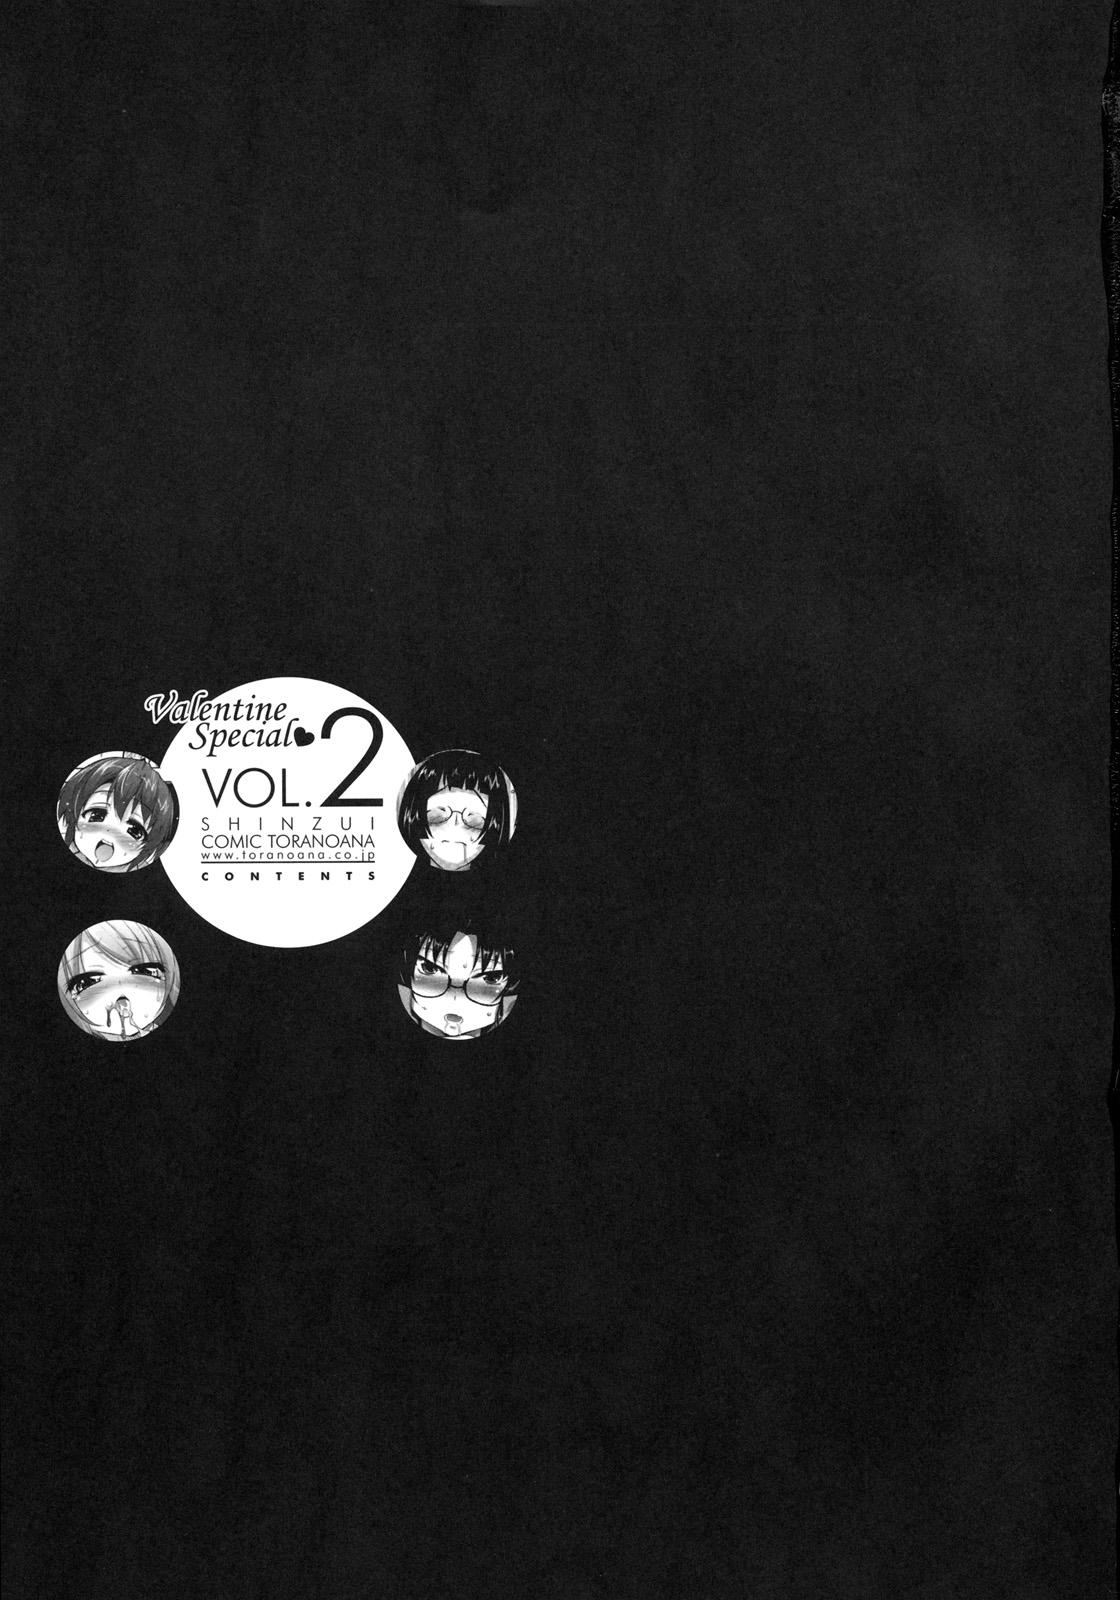 Shinzui Valentine Special Vol. 2 1